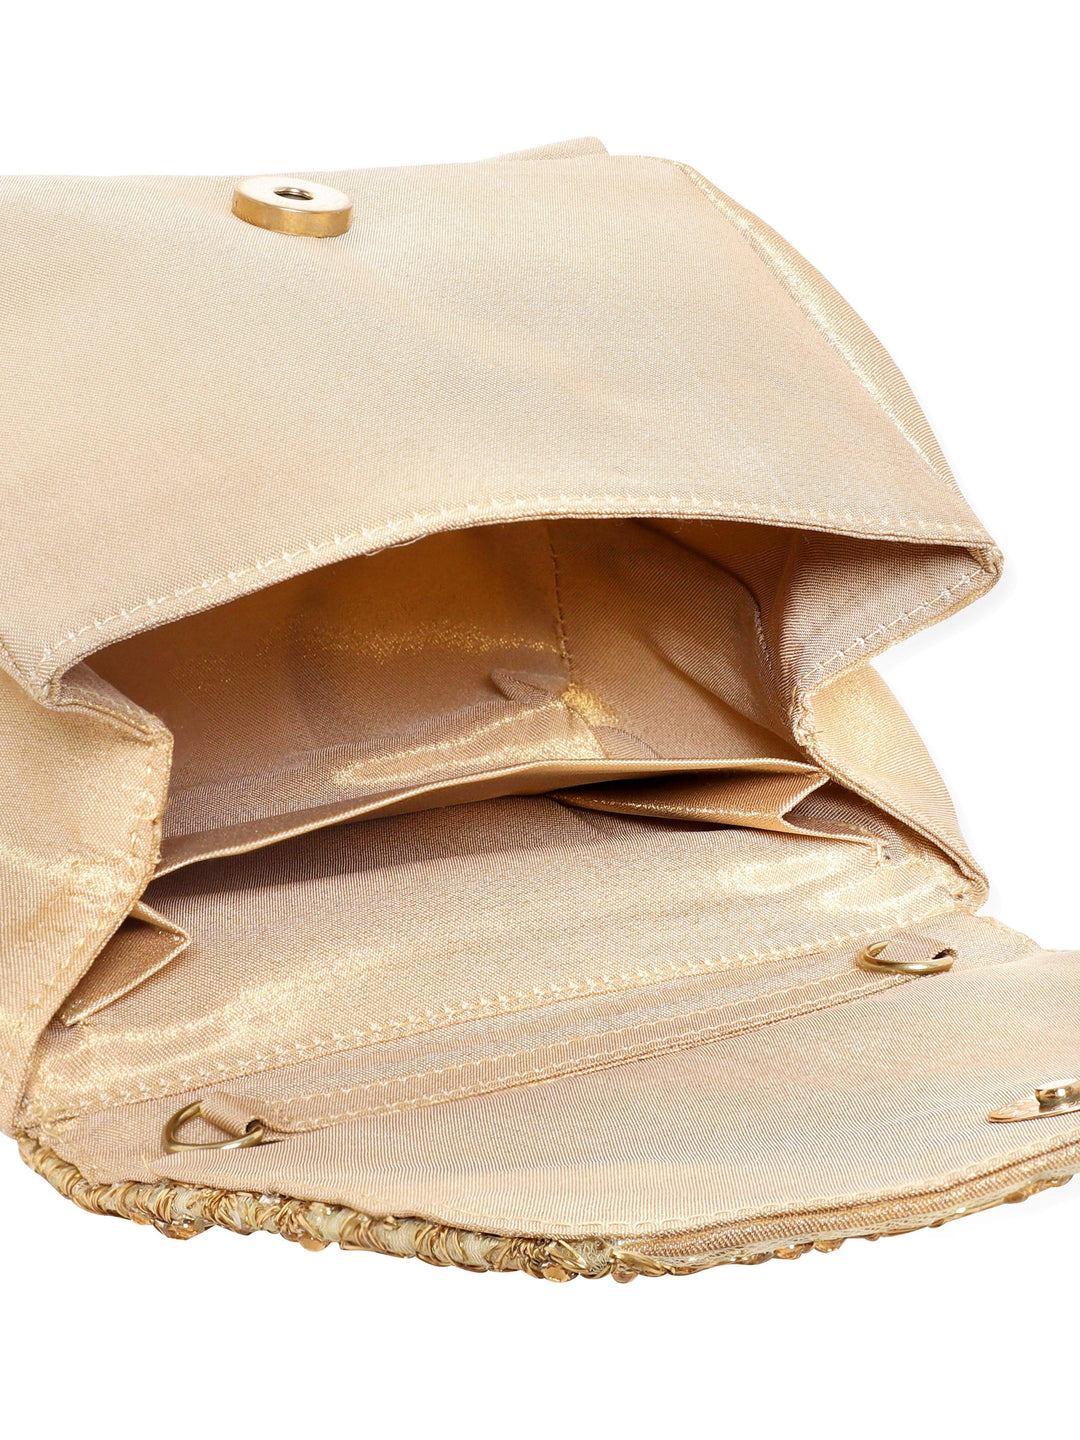 Chic Glimmer Gold Handbag with Beaded Embellishments - Modern Elegance Handbag, Wallet Accessories & Clutches